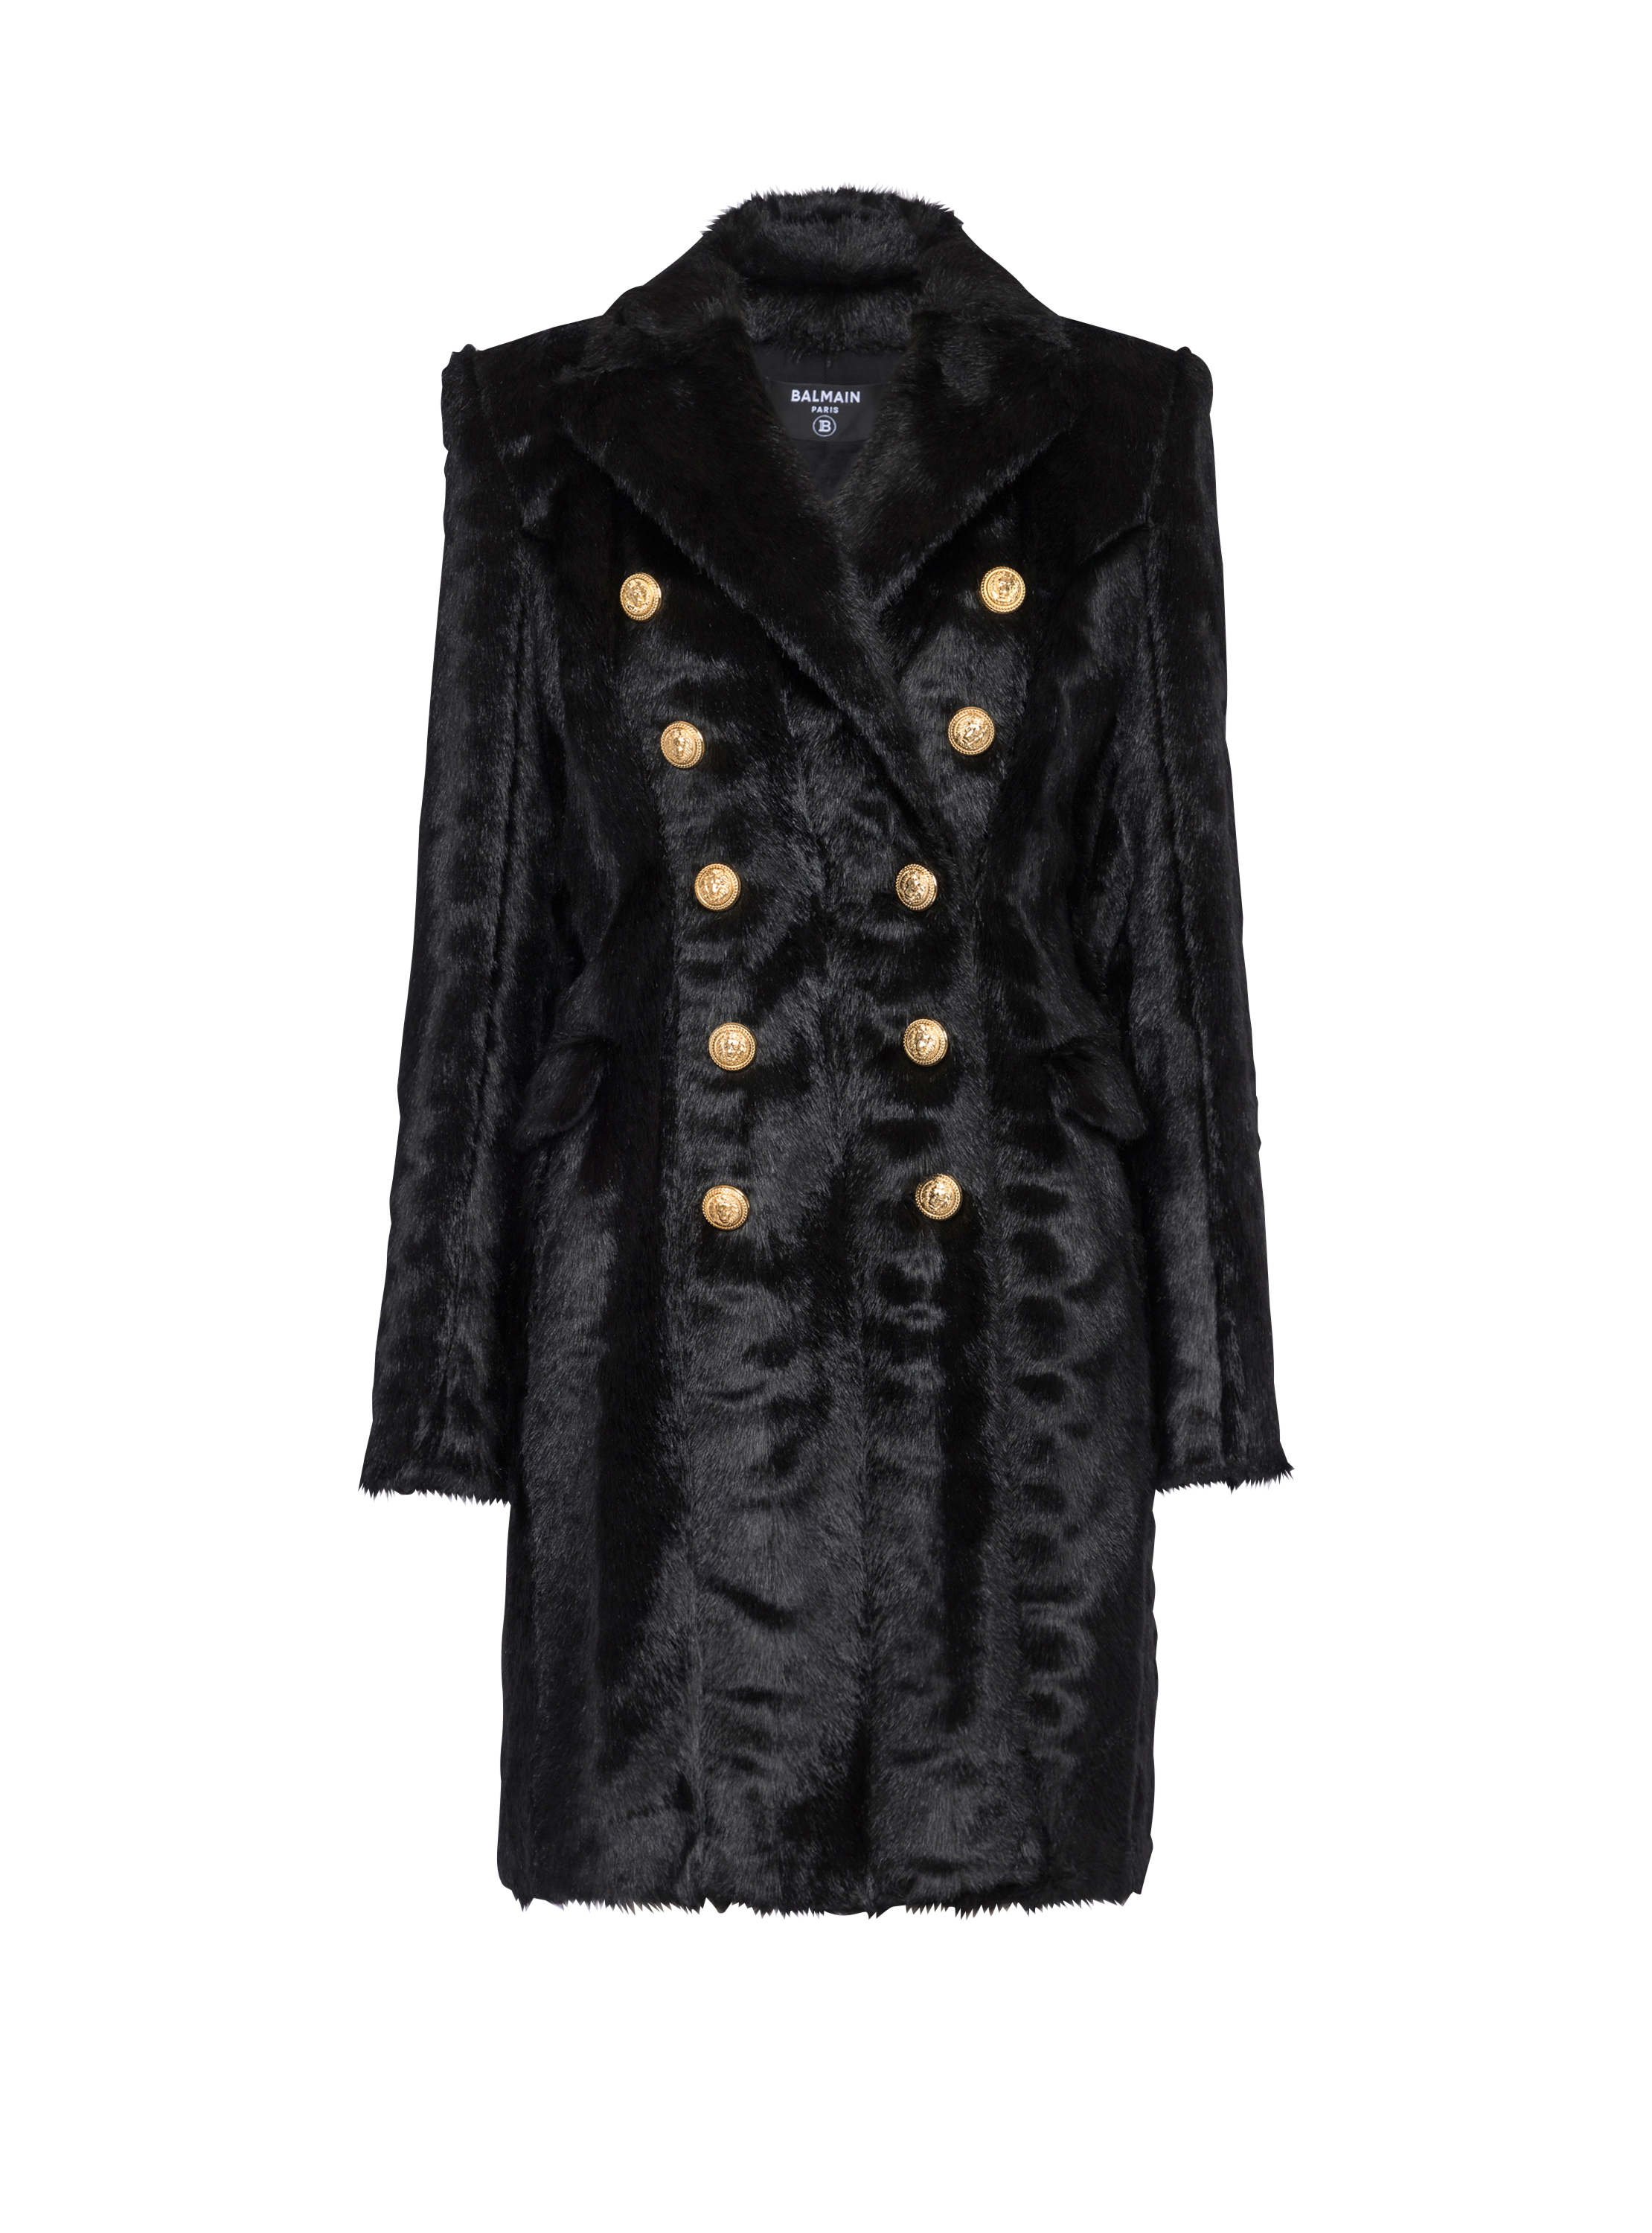 Balmain Coats in Grey Black Womens Coats Balmain Coats - Save 34% 